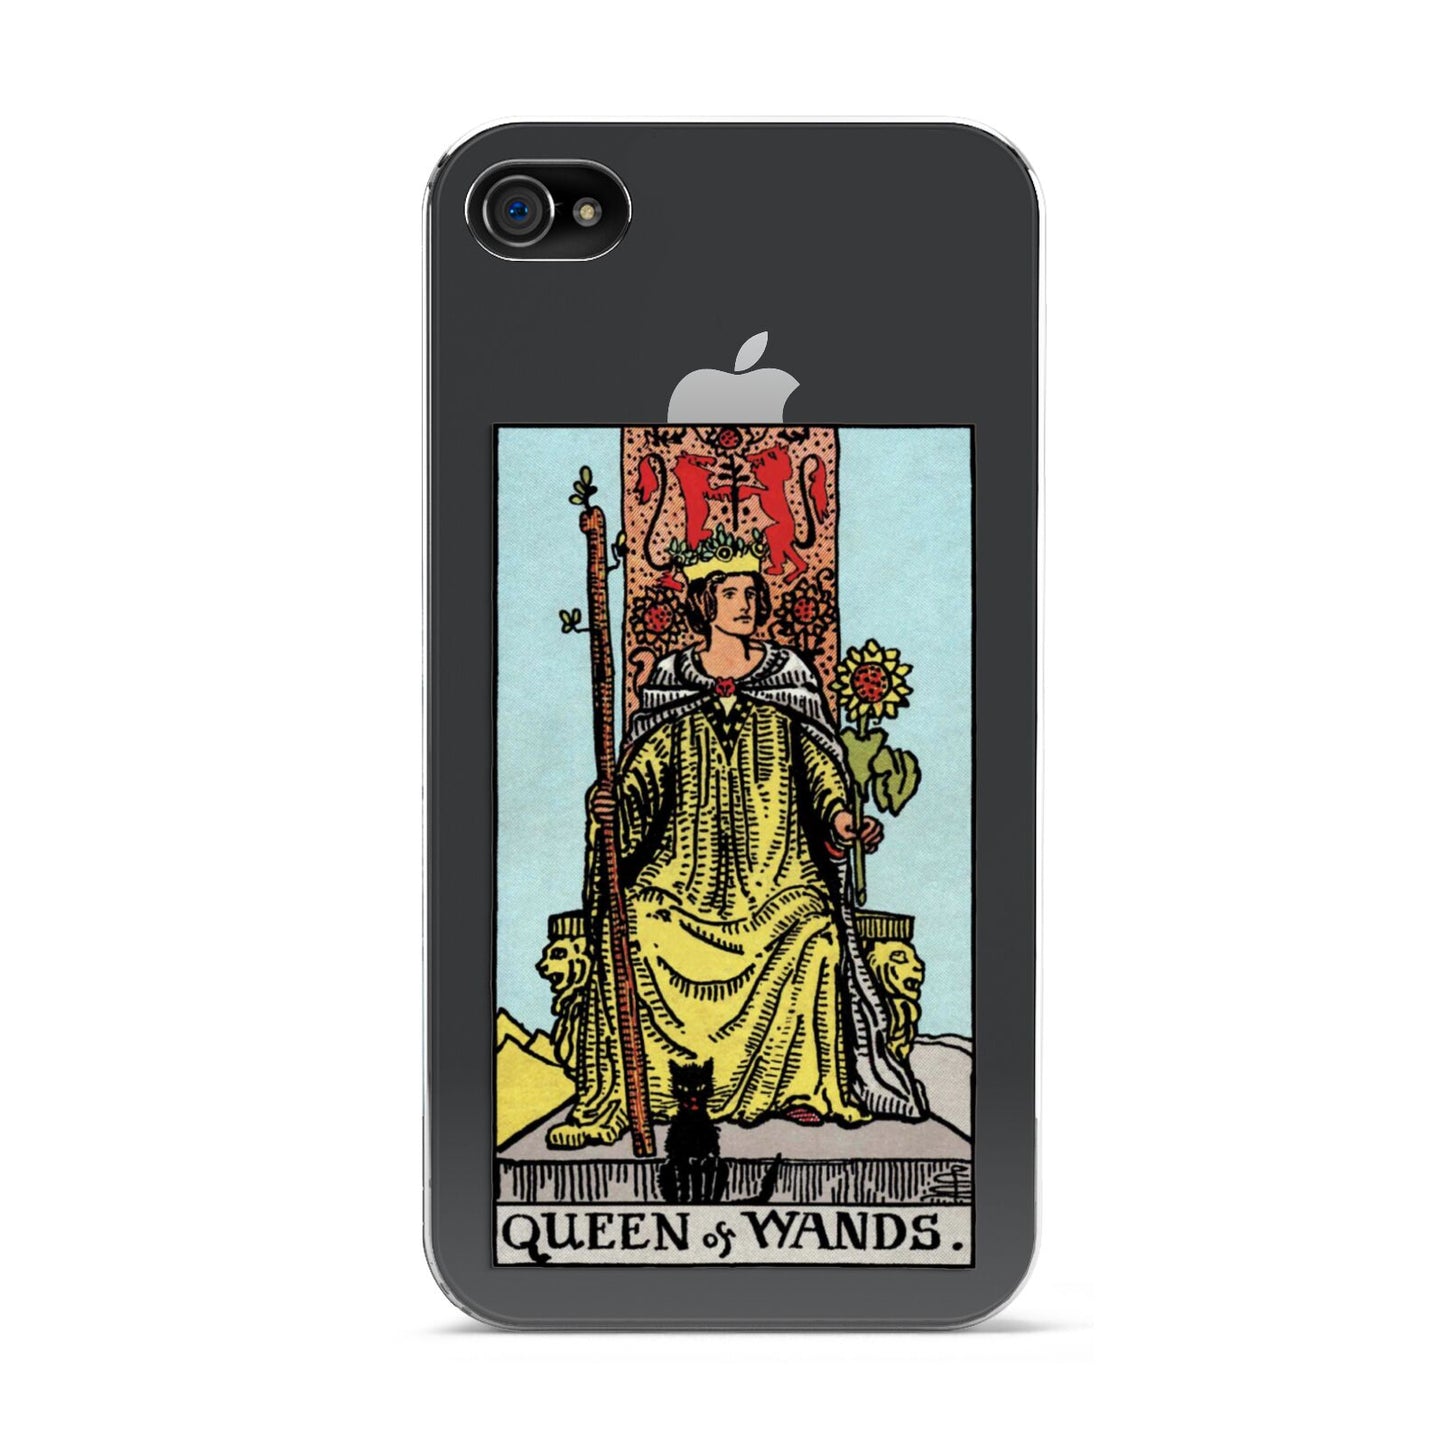 Queen of Wands Tarot Card Apple iPhone 4s Case